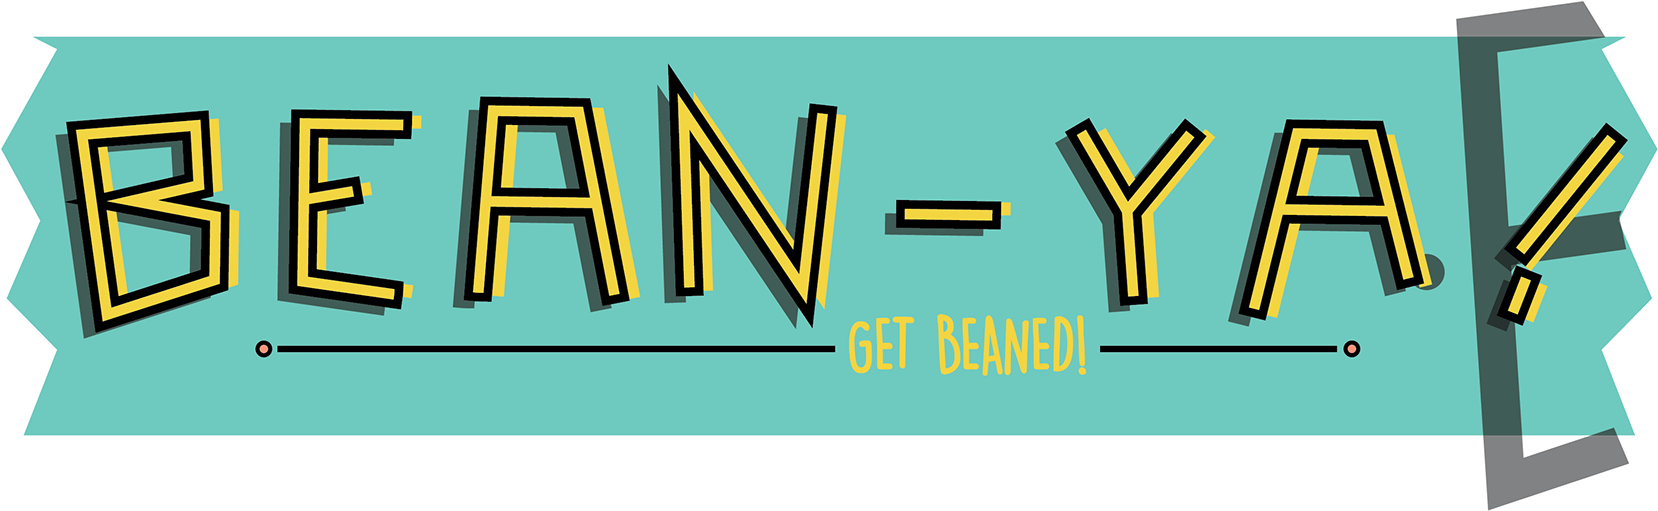 Bean Ya Get Beaned Banner PNG